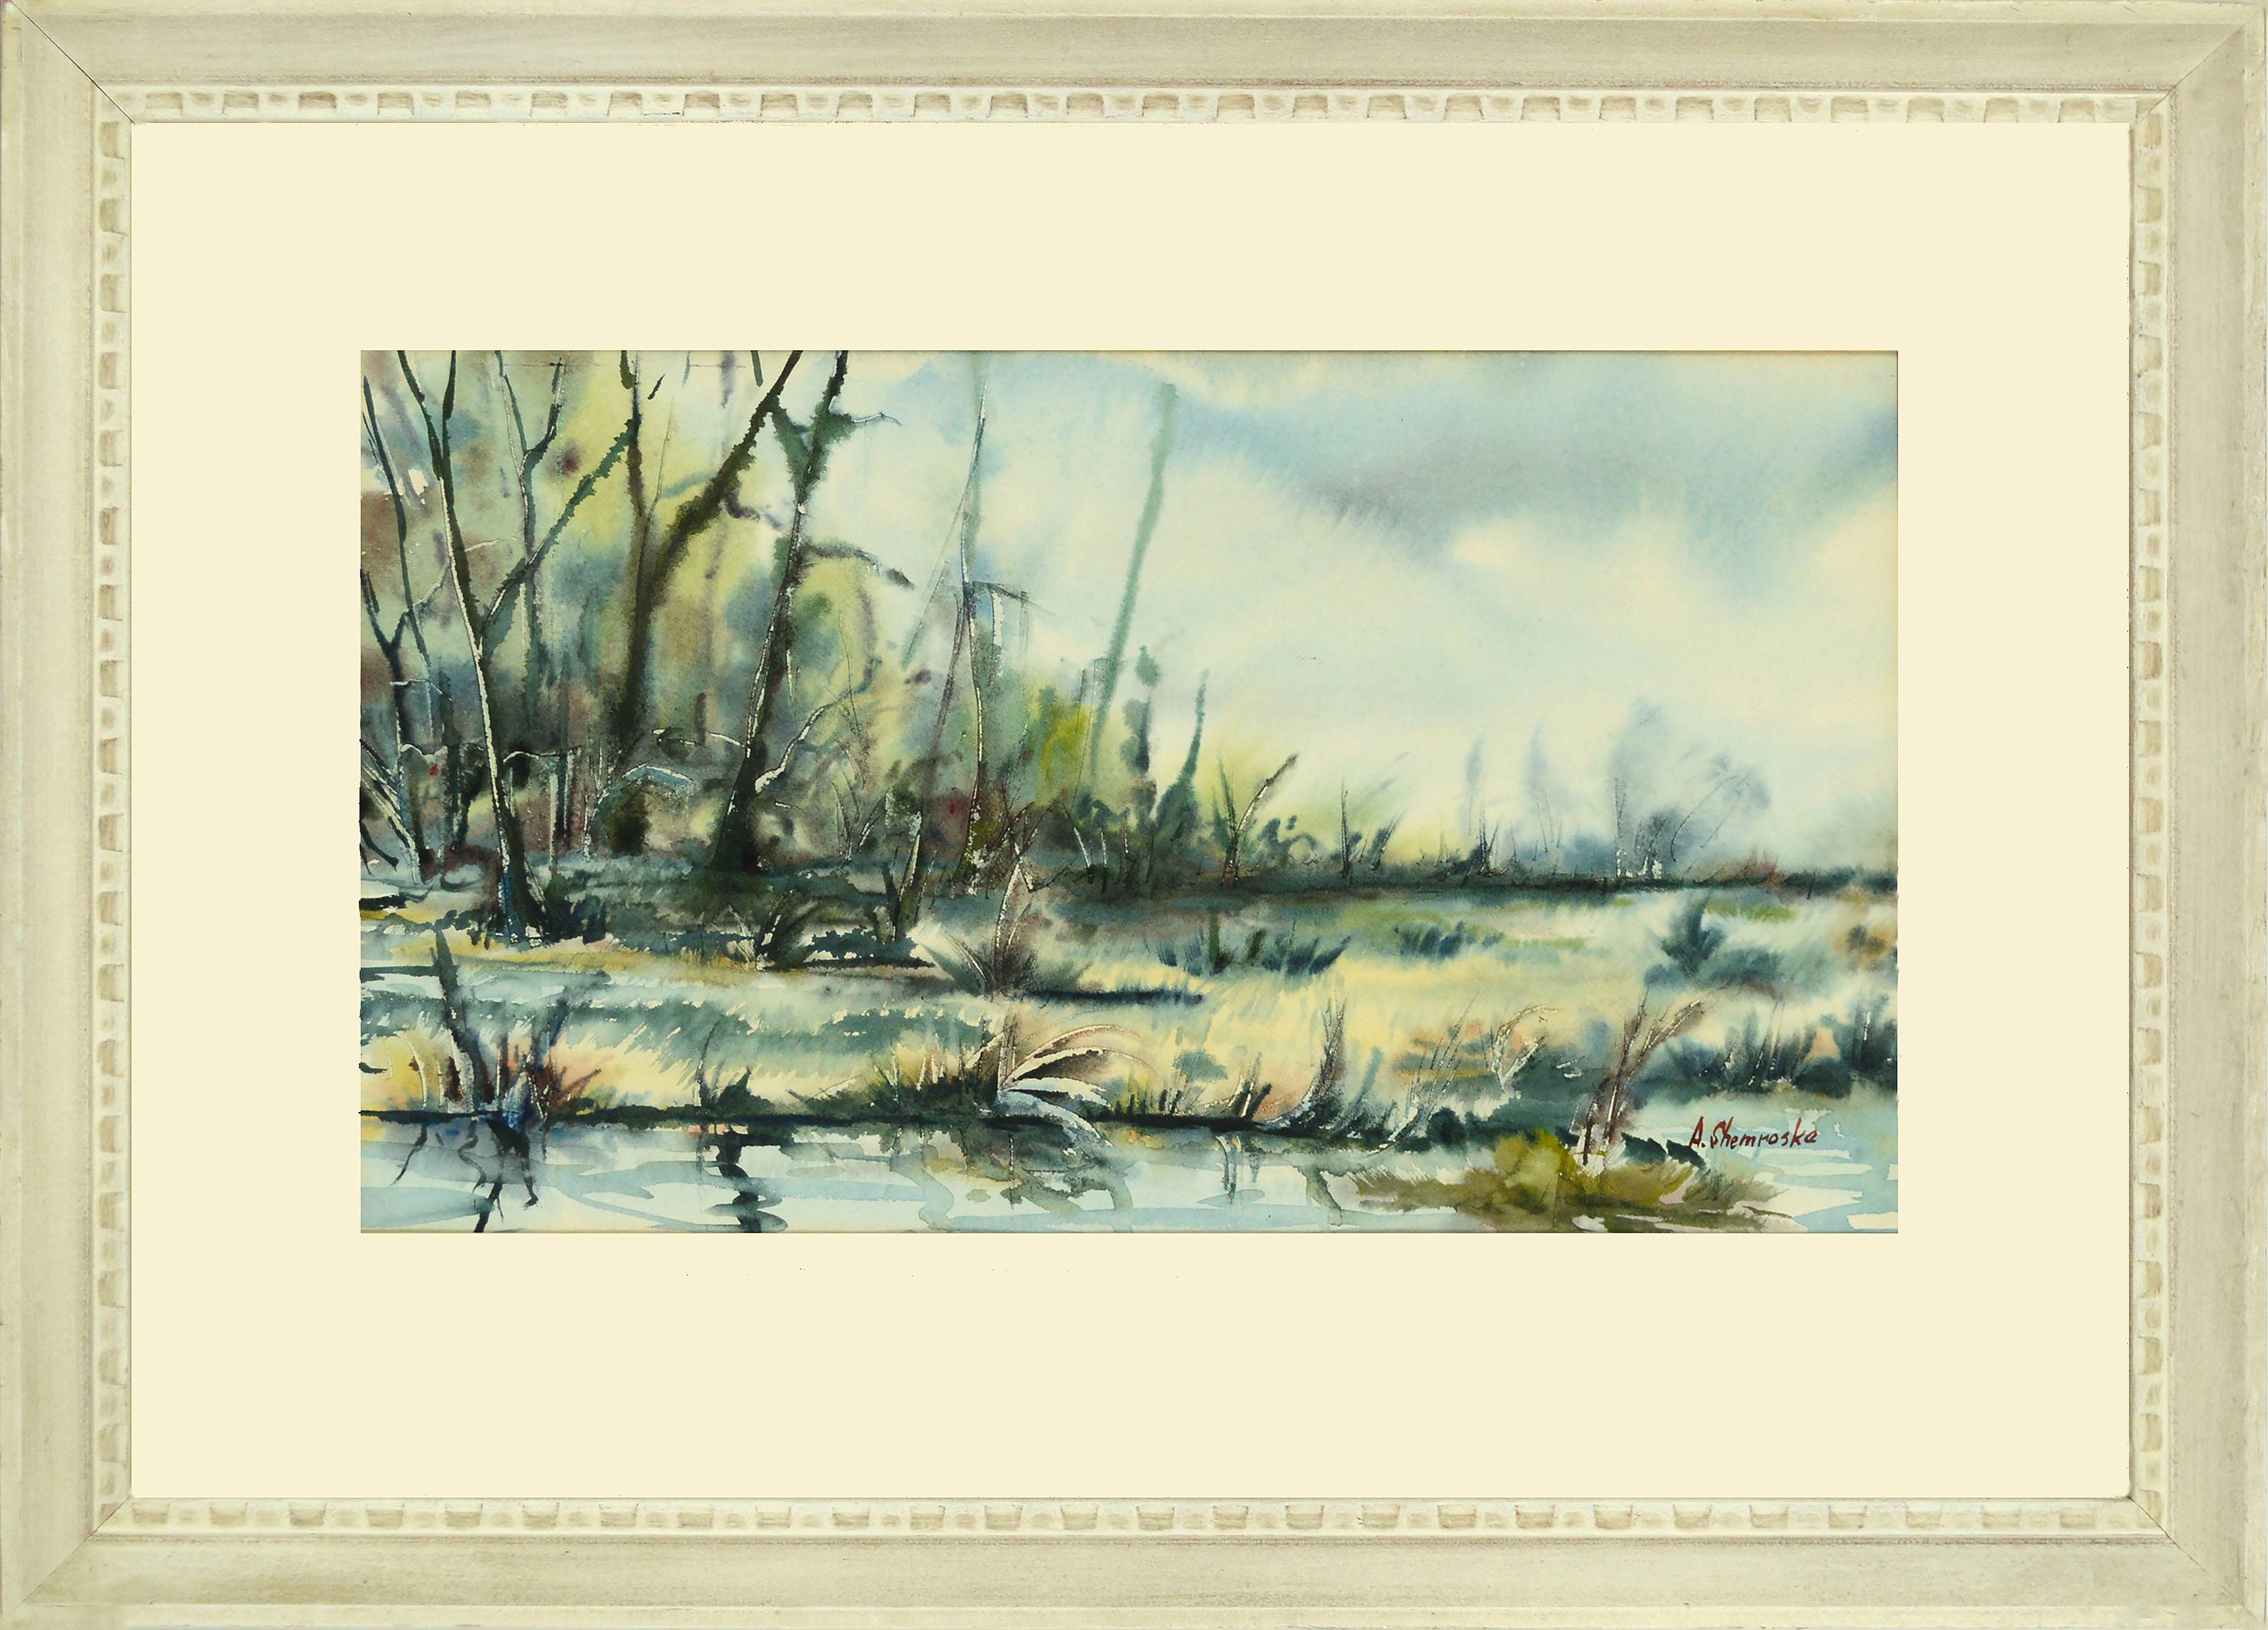 Anthony Shemroske Landscape Art - Wetland Trees Reflections, Mid Century Landscape Watercolor 